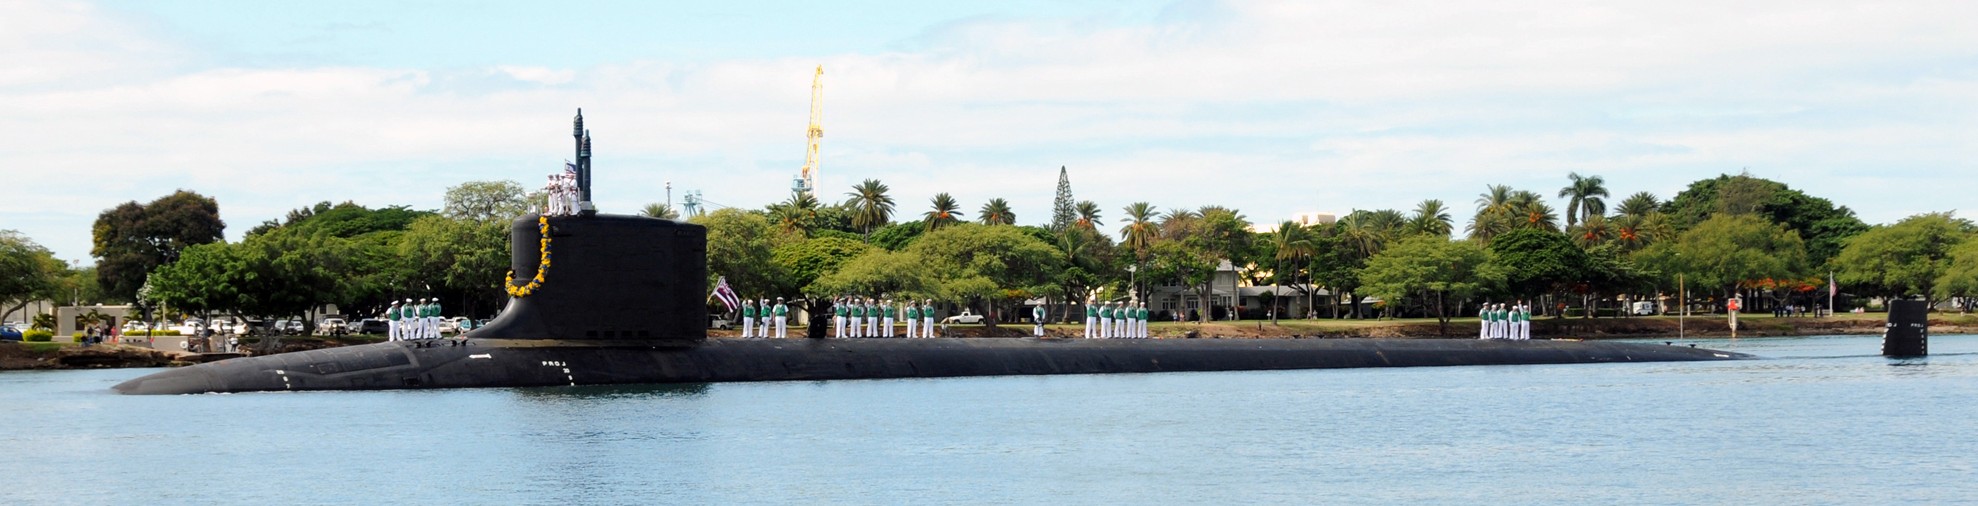 ssn-776 uss hawaii virginia class attack submarine us navy 2009 37